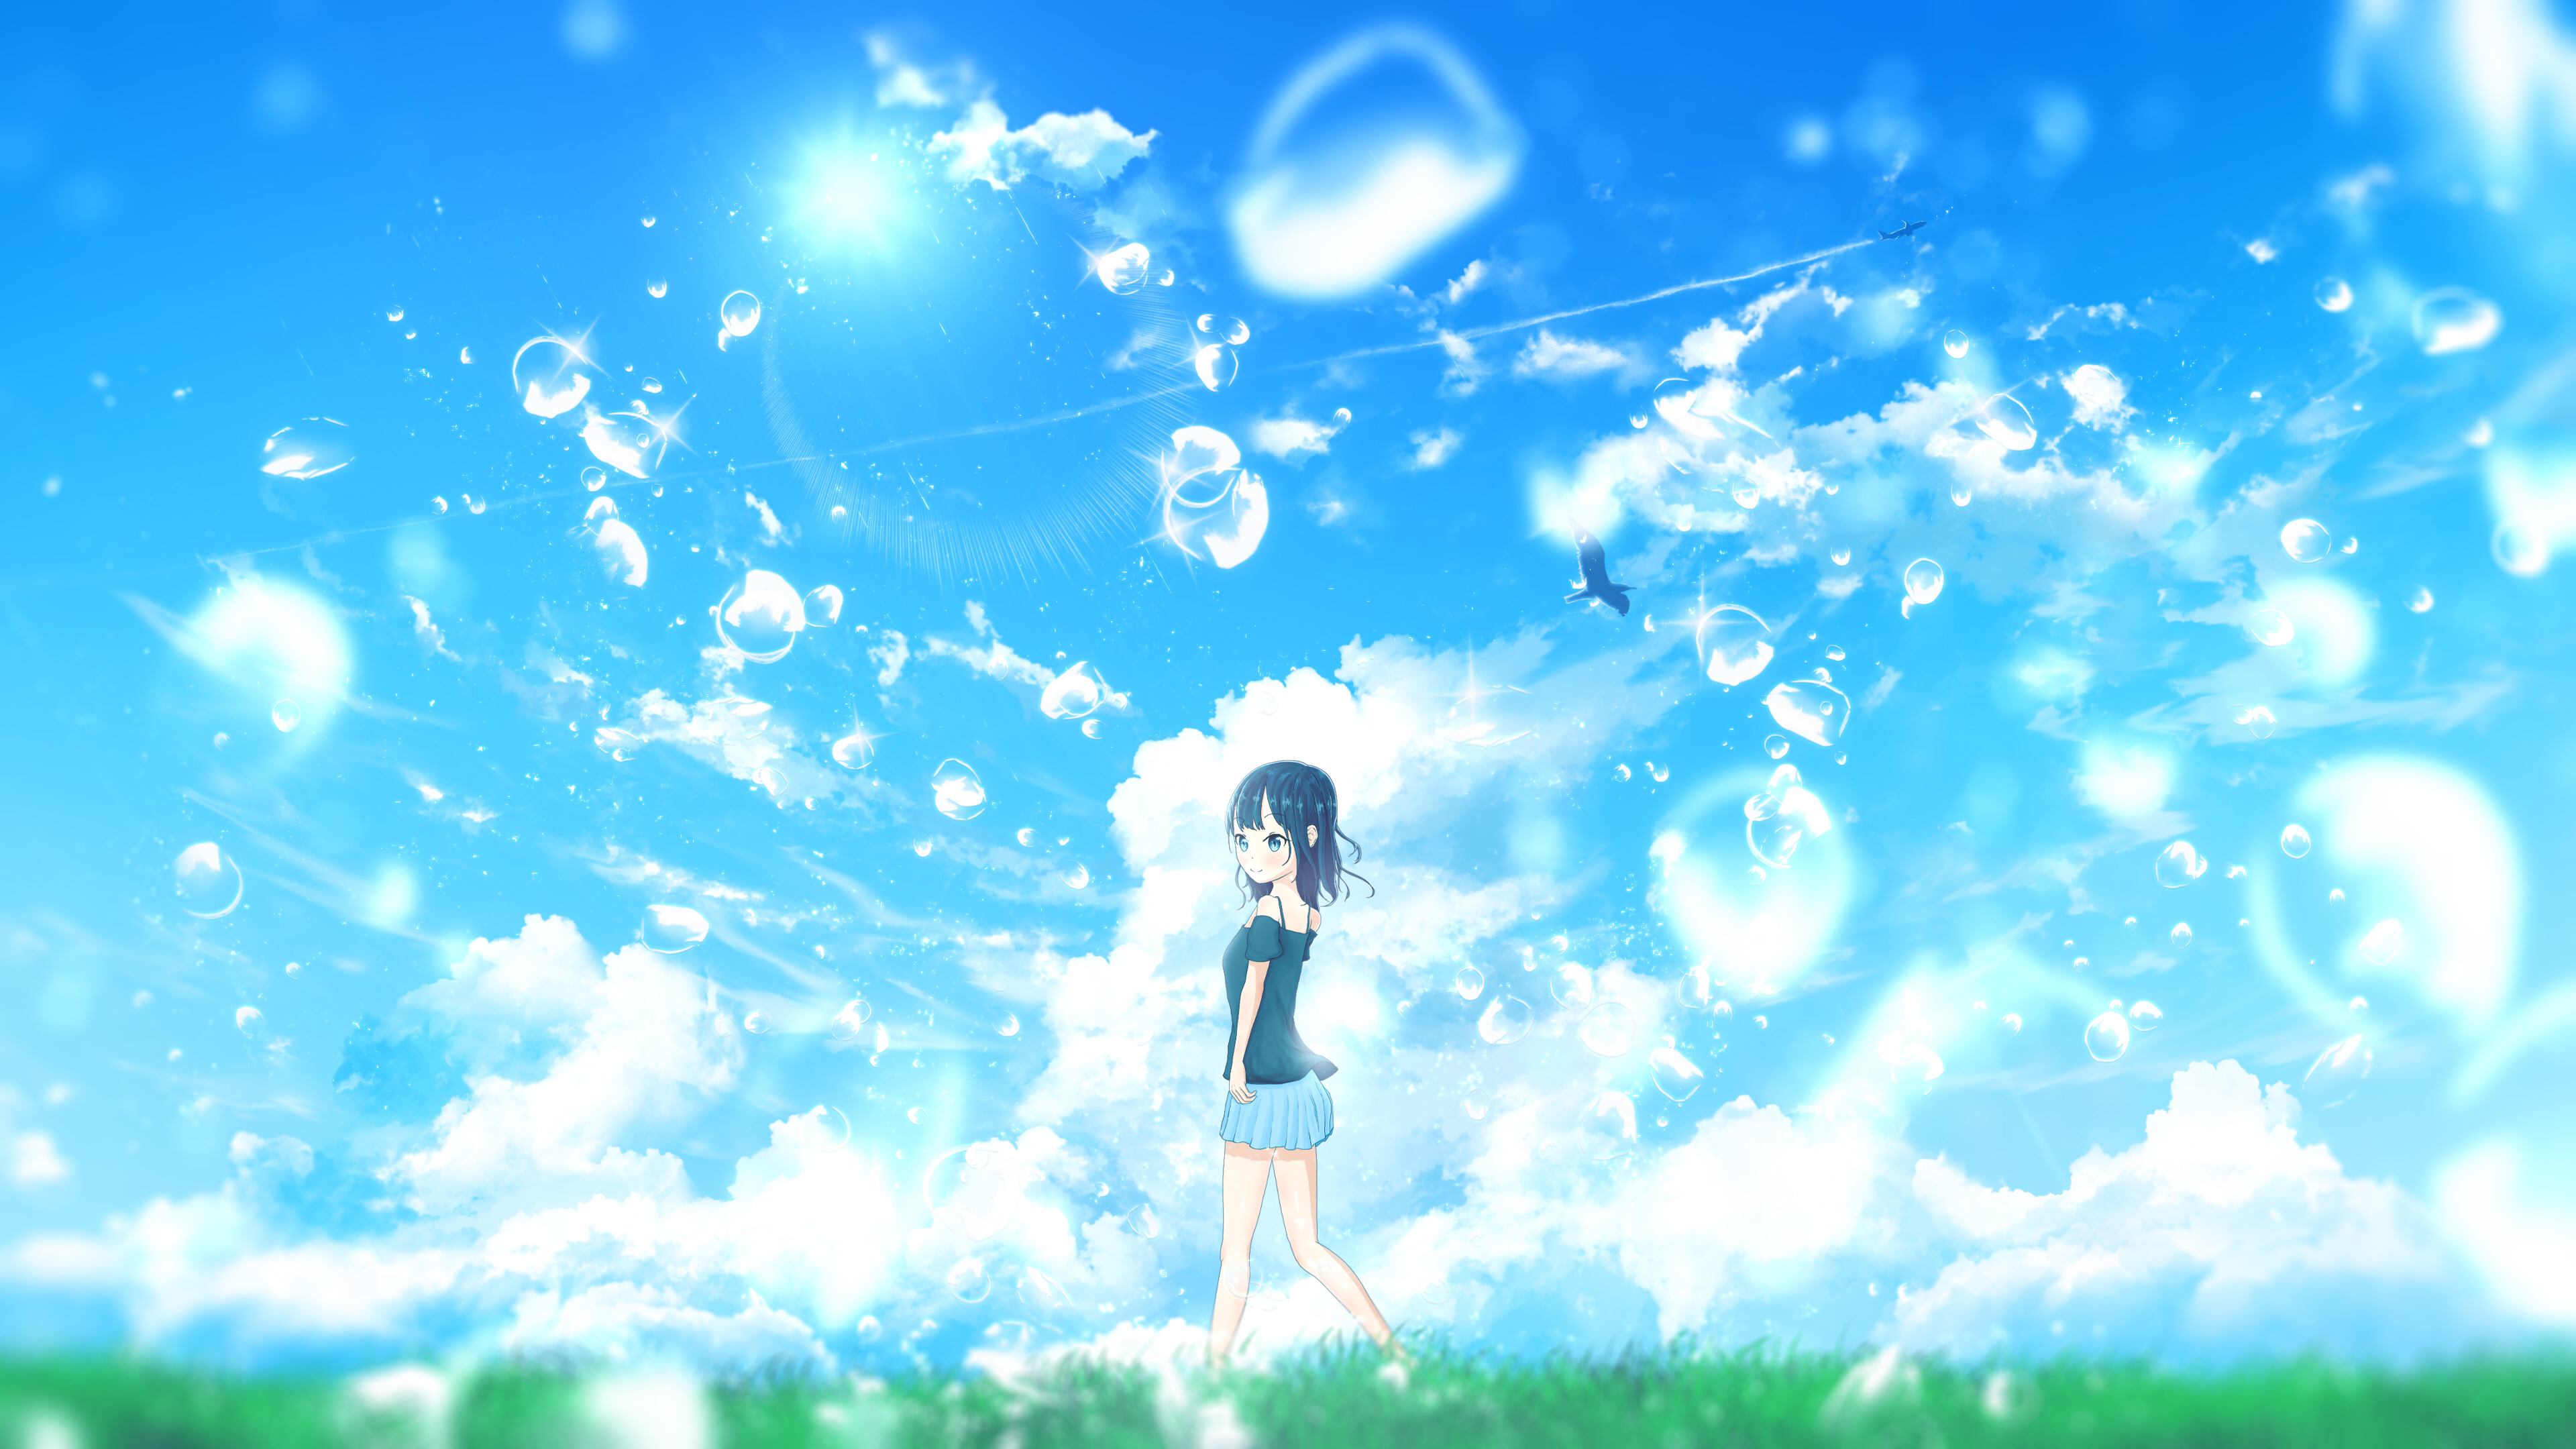 Anime Original 4k Ultra HD Wallpaper by furi / ふーり